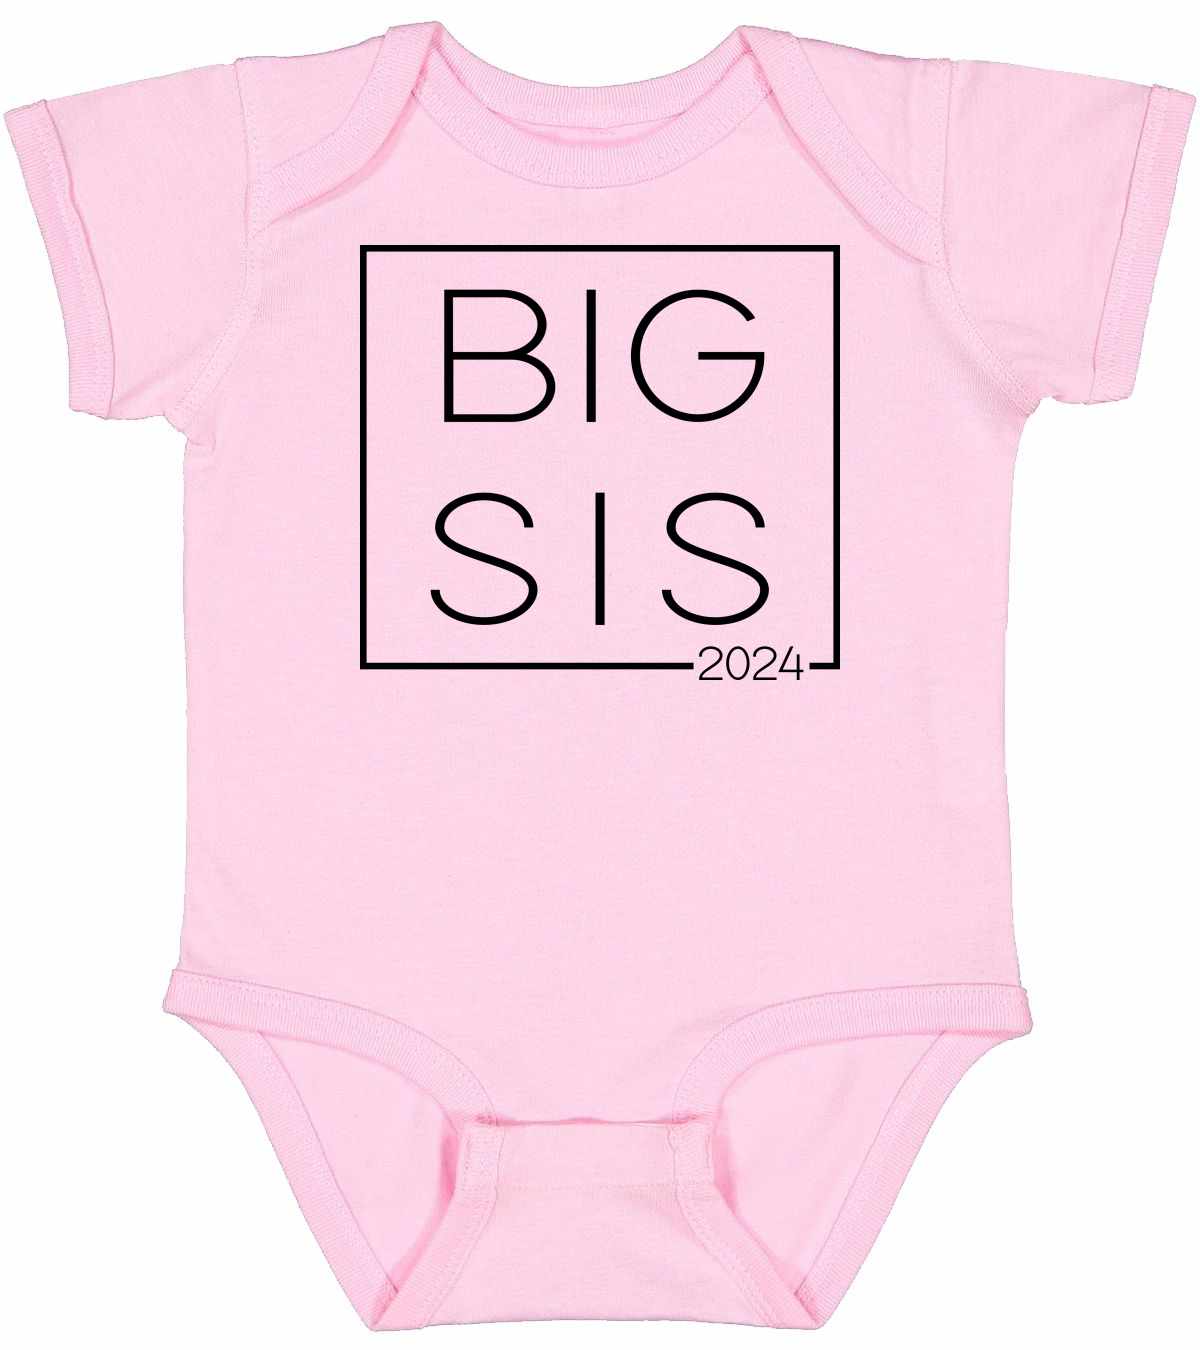 Big Sis 2024 - Big Sister Boxed on Infant BodySuit (#1380-10)